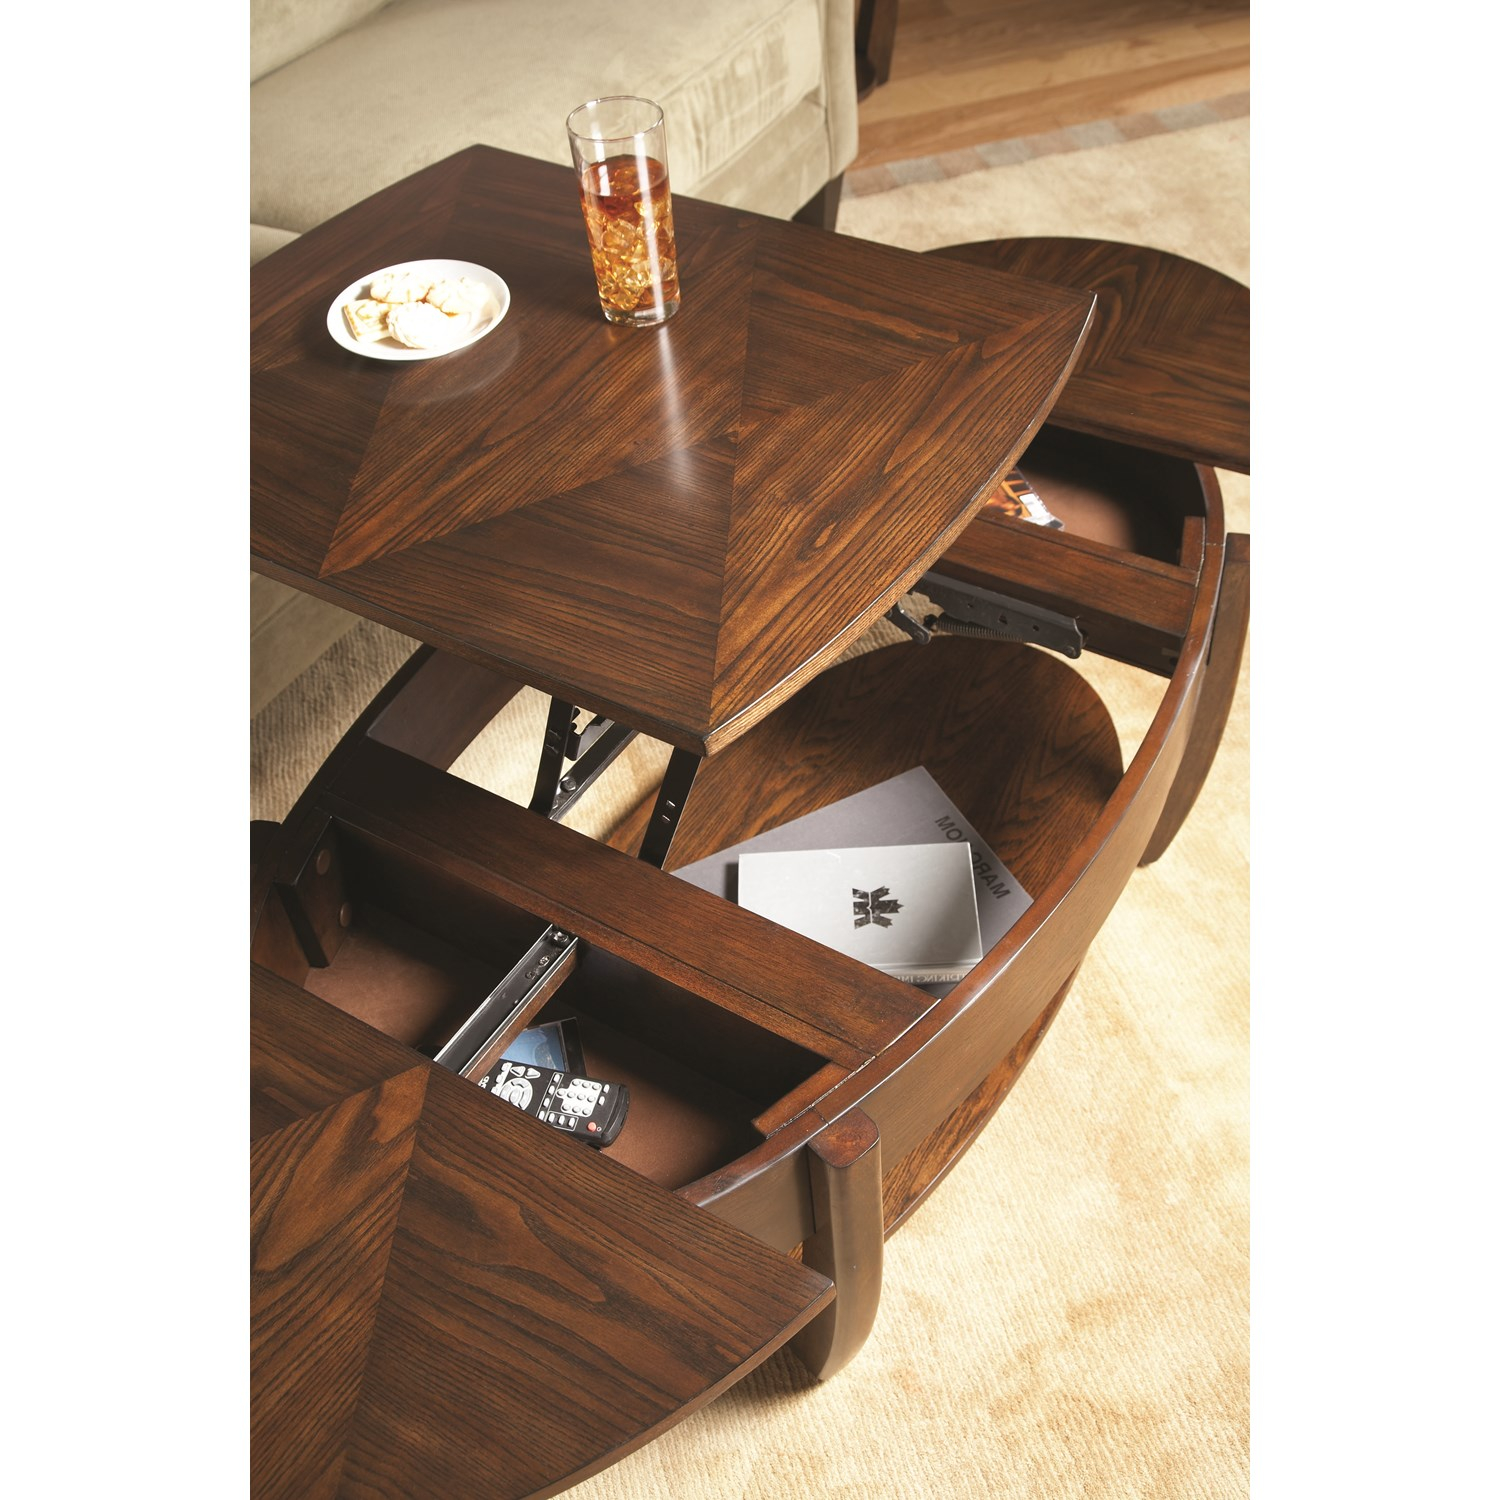 Oval Lift Top Coffee Table Hipenmoedernl inside sizing 1500 X 1500